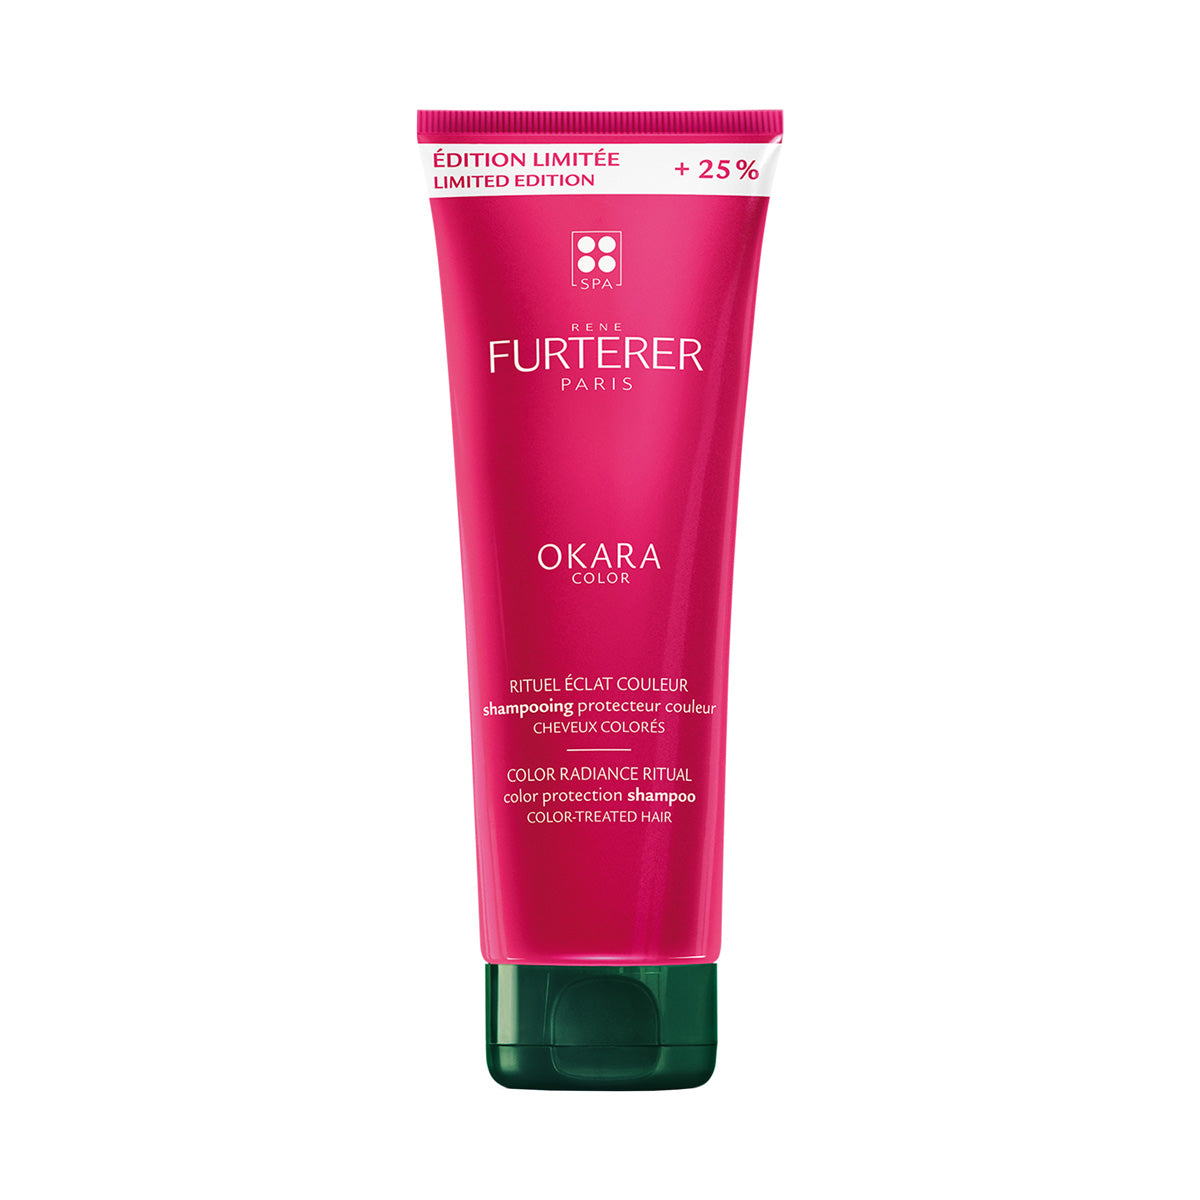 Rene Furtere|Okara Color protection Shampoo|250ml